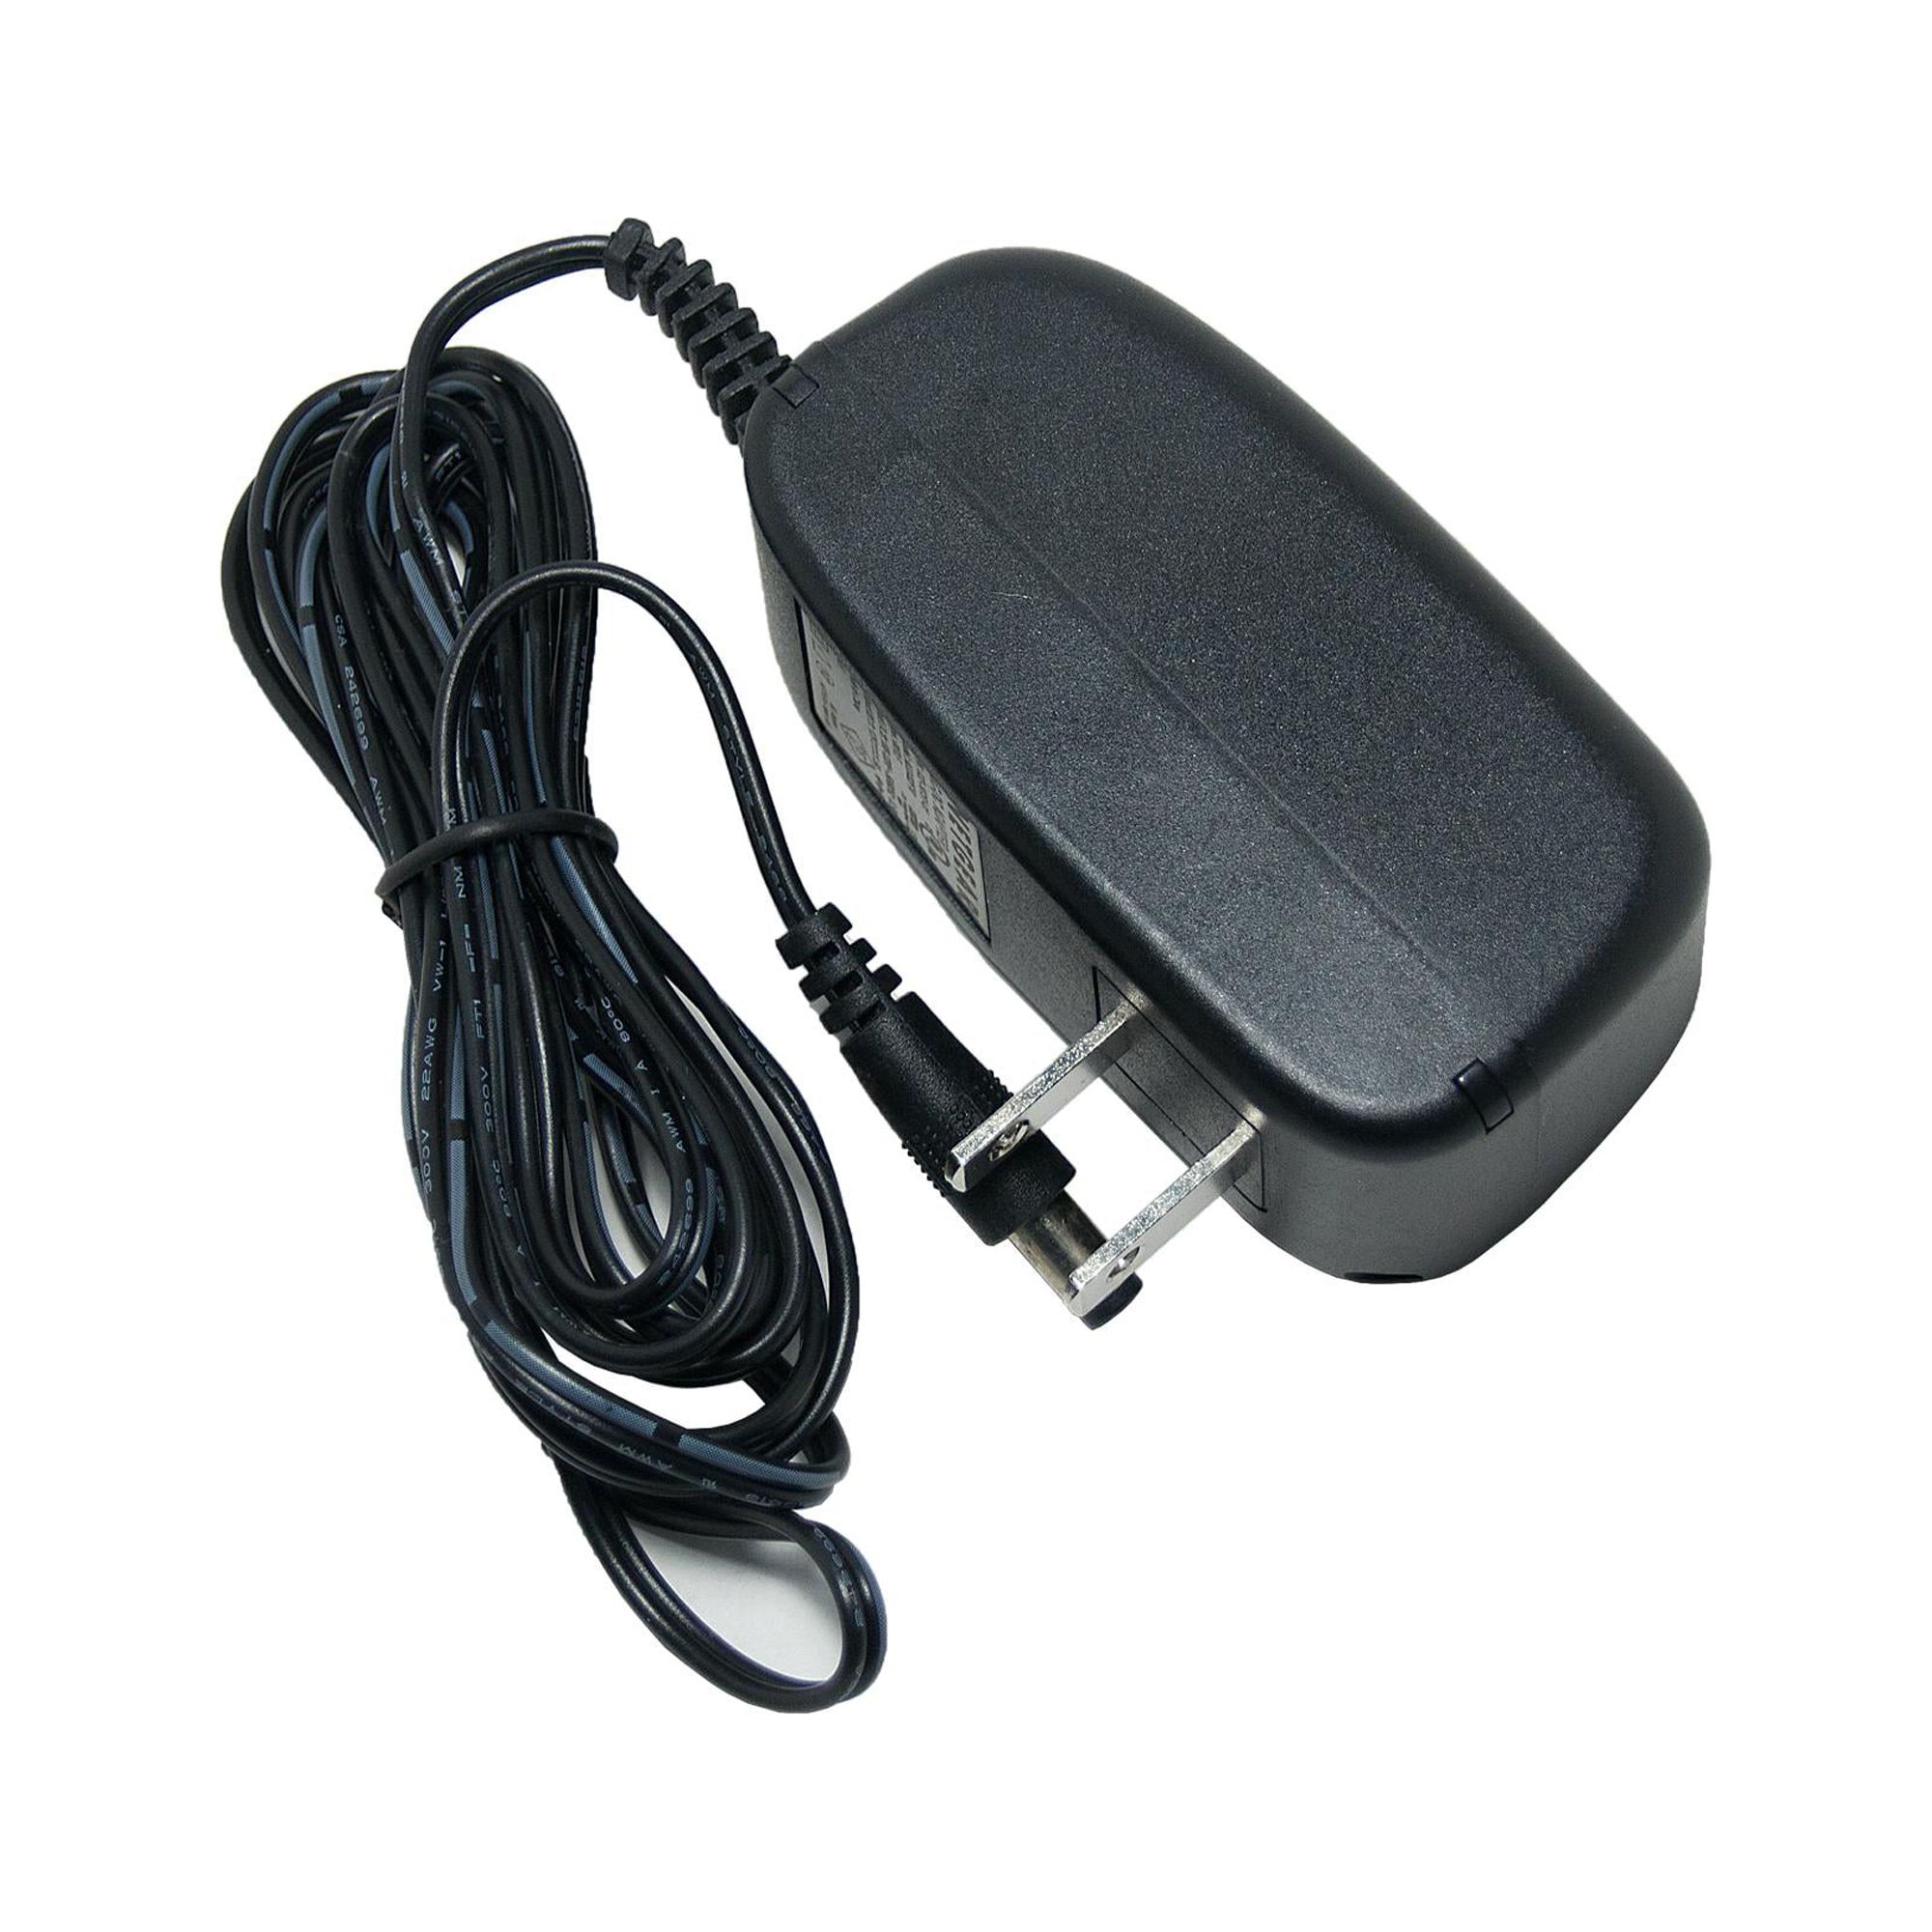 Netgear Adapter for N300 ADSL Router DGN2200 DGN2200v2 DGN3500, N300 Modem C3000 - image 2 of 3